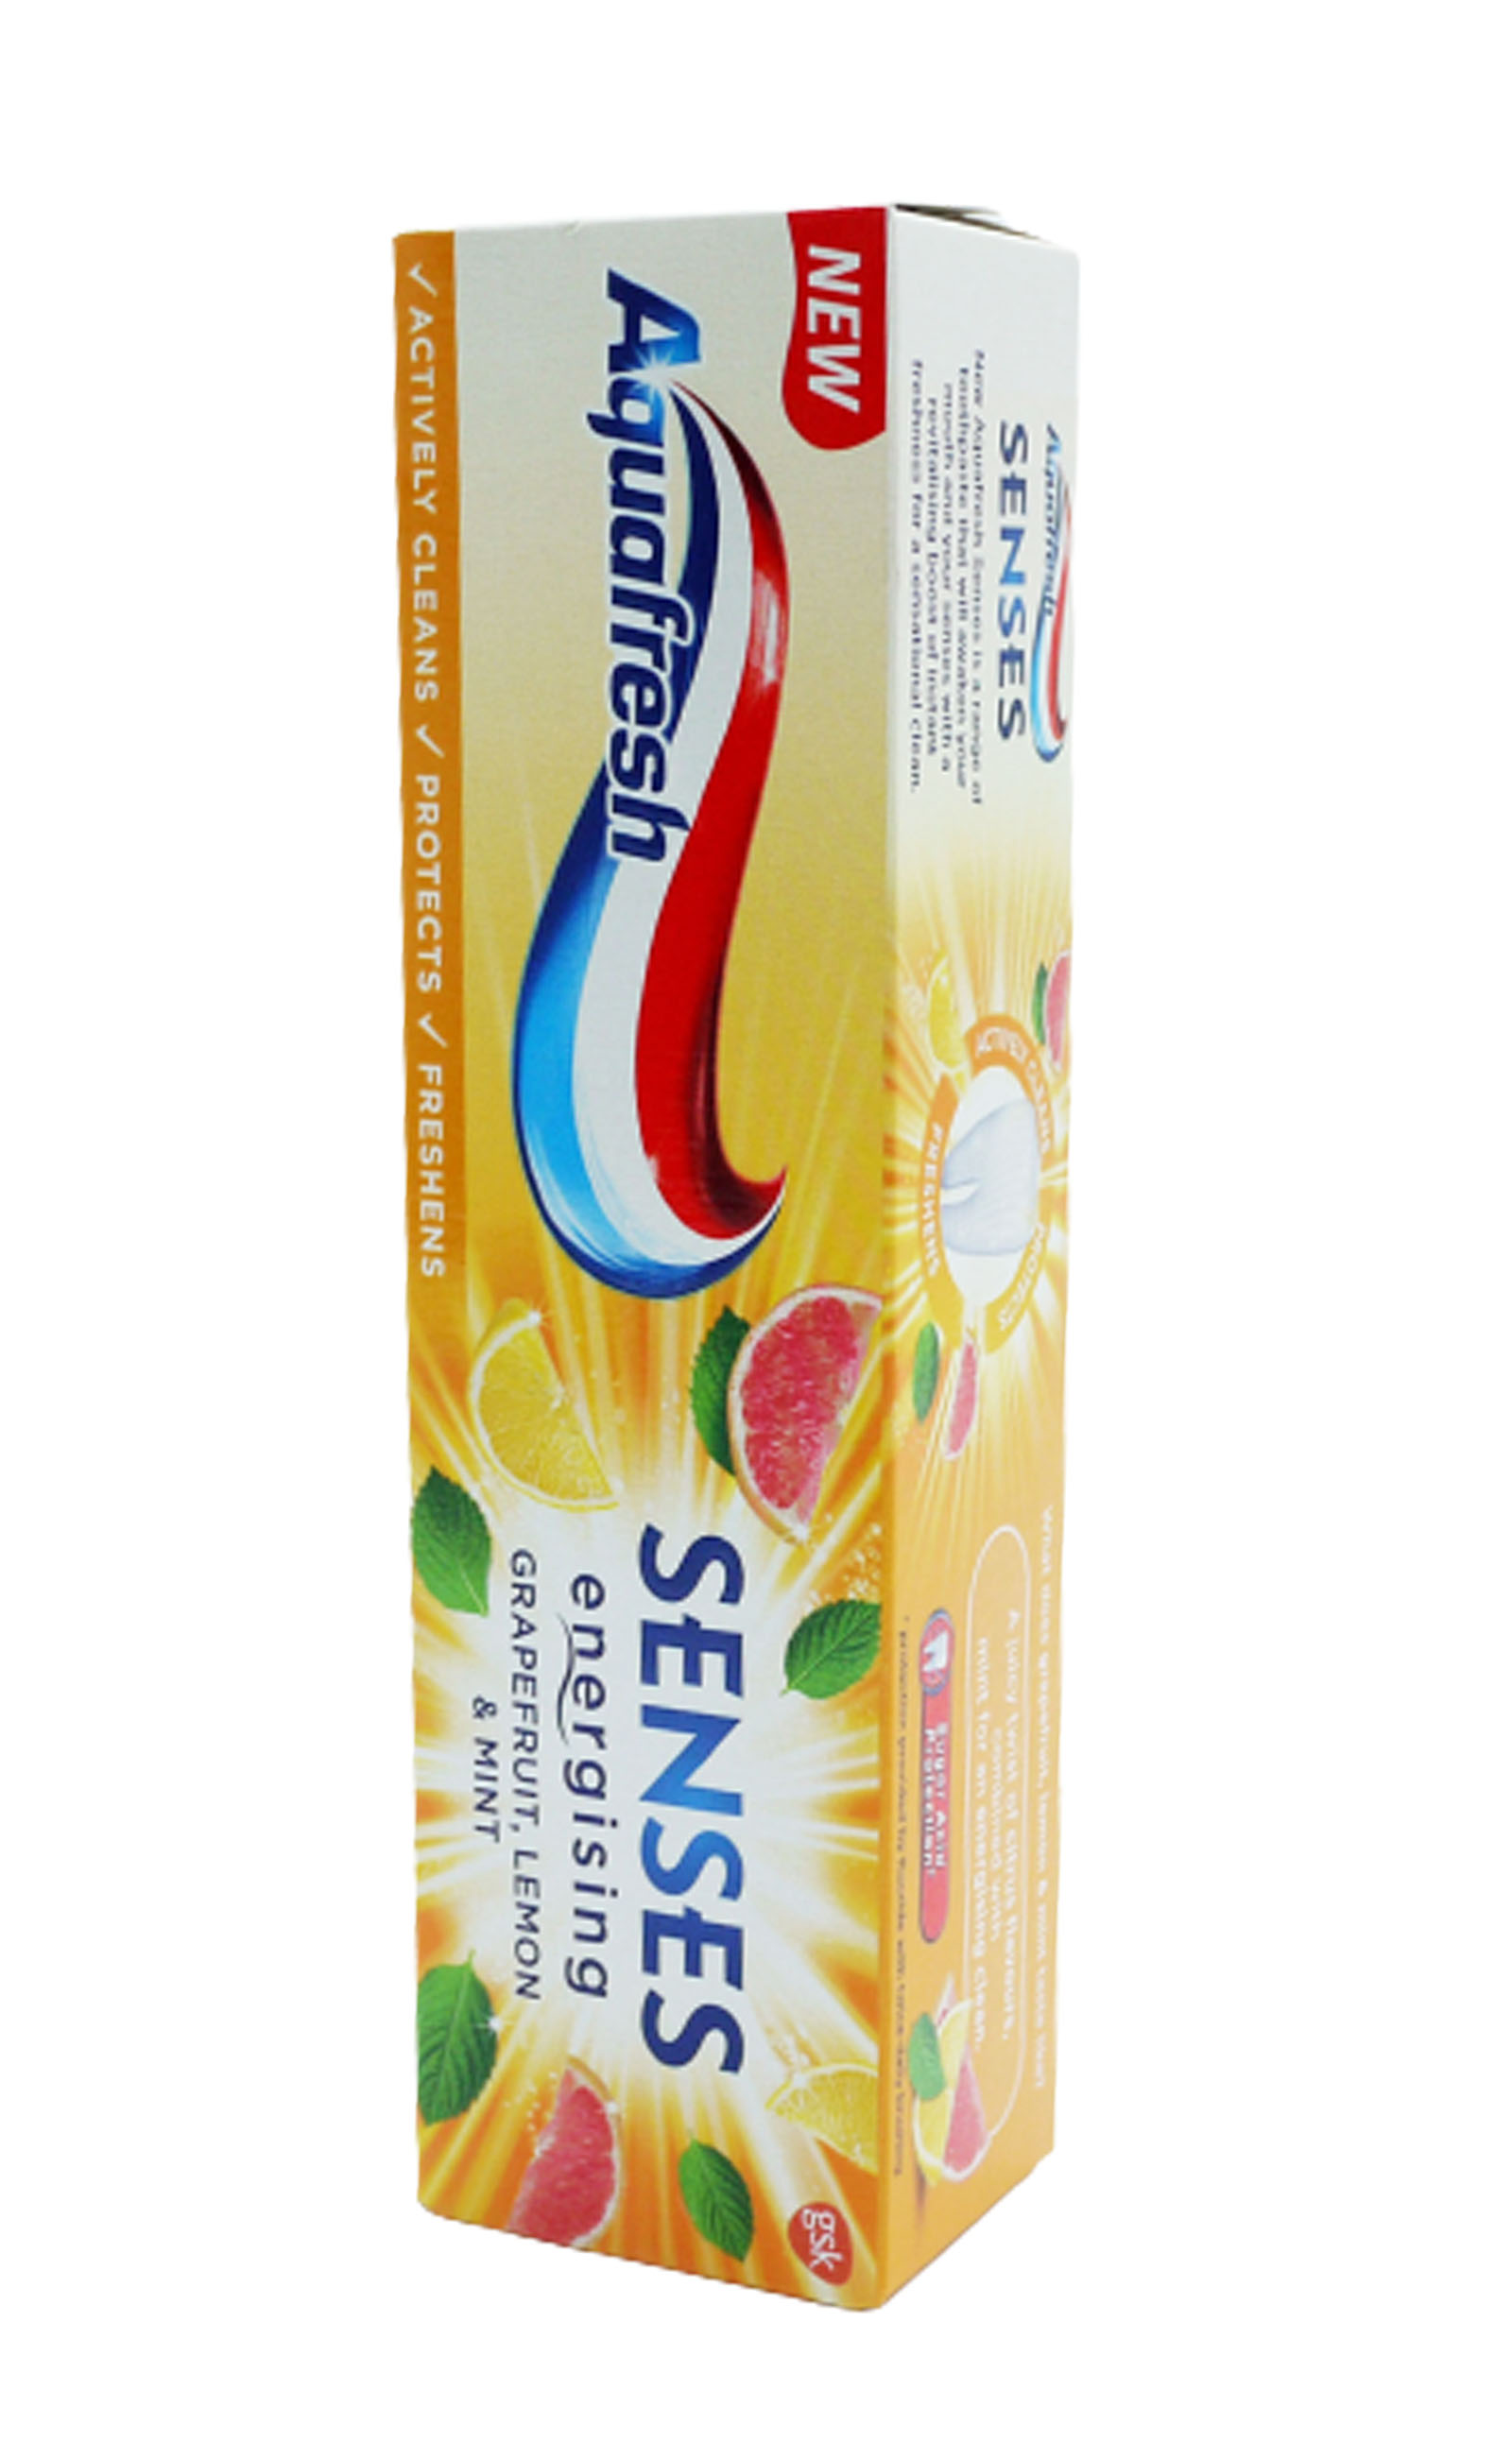 Aquafresh Senses Toothpaste Grapefruit Lemon & Mint 75ml